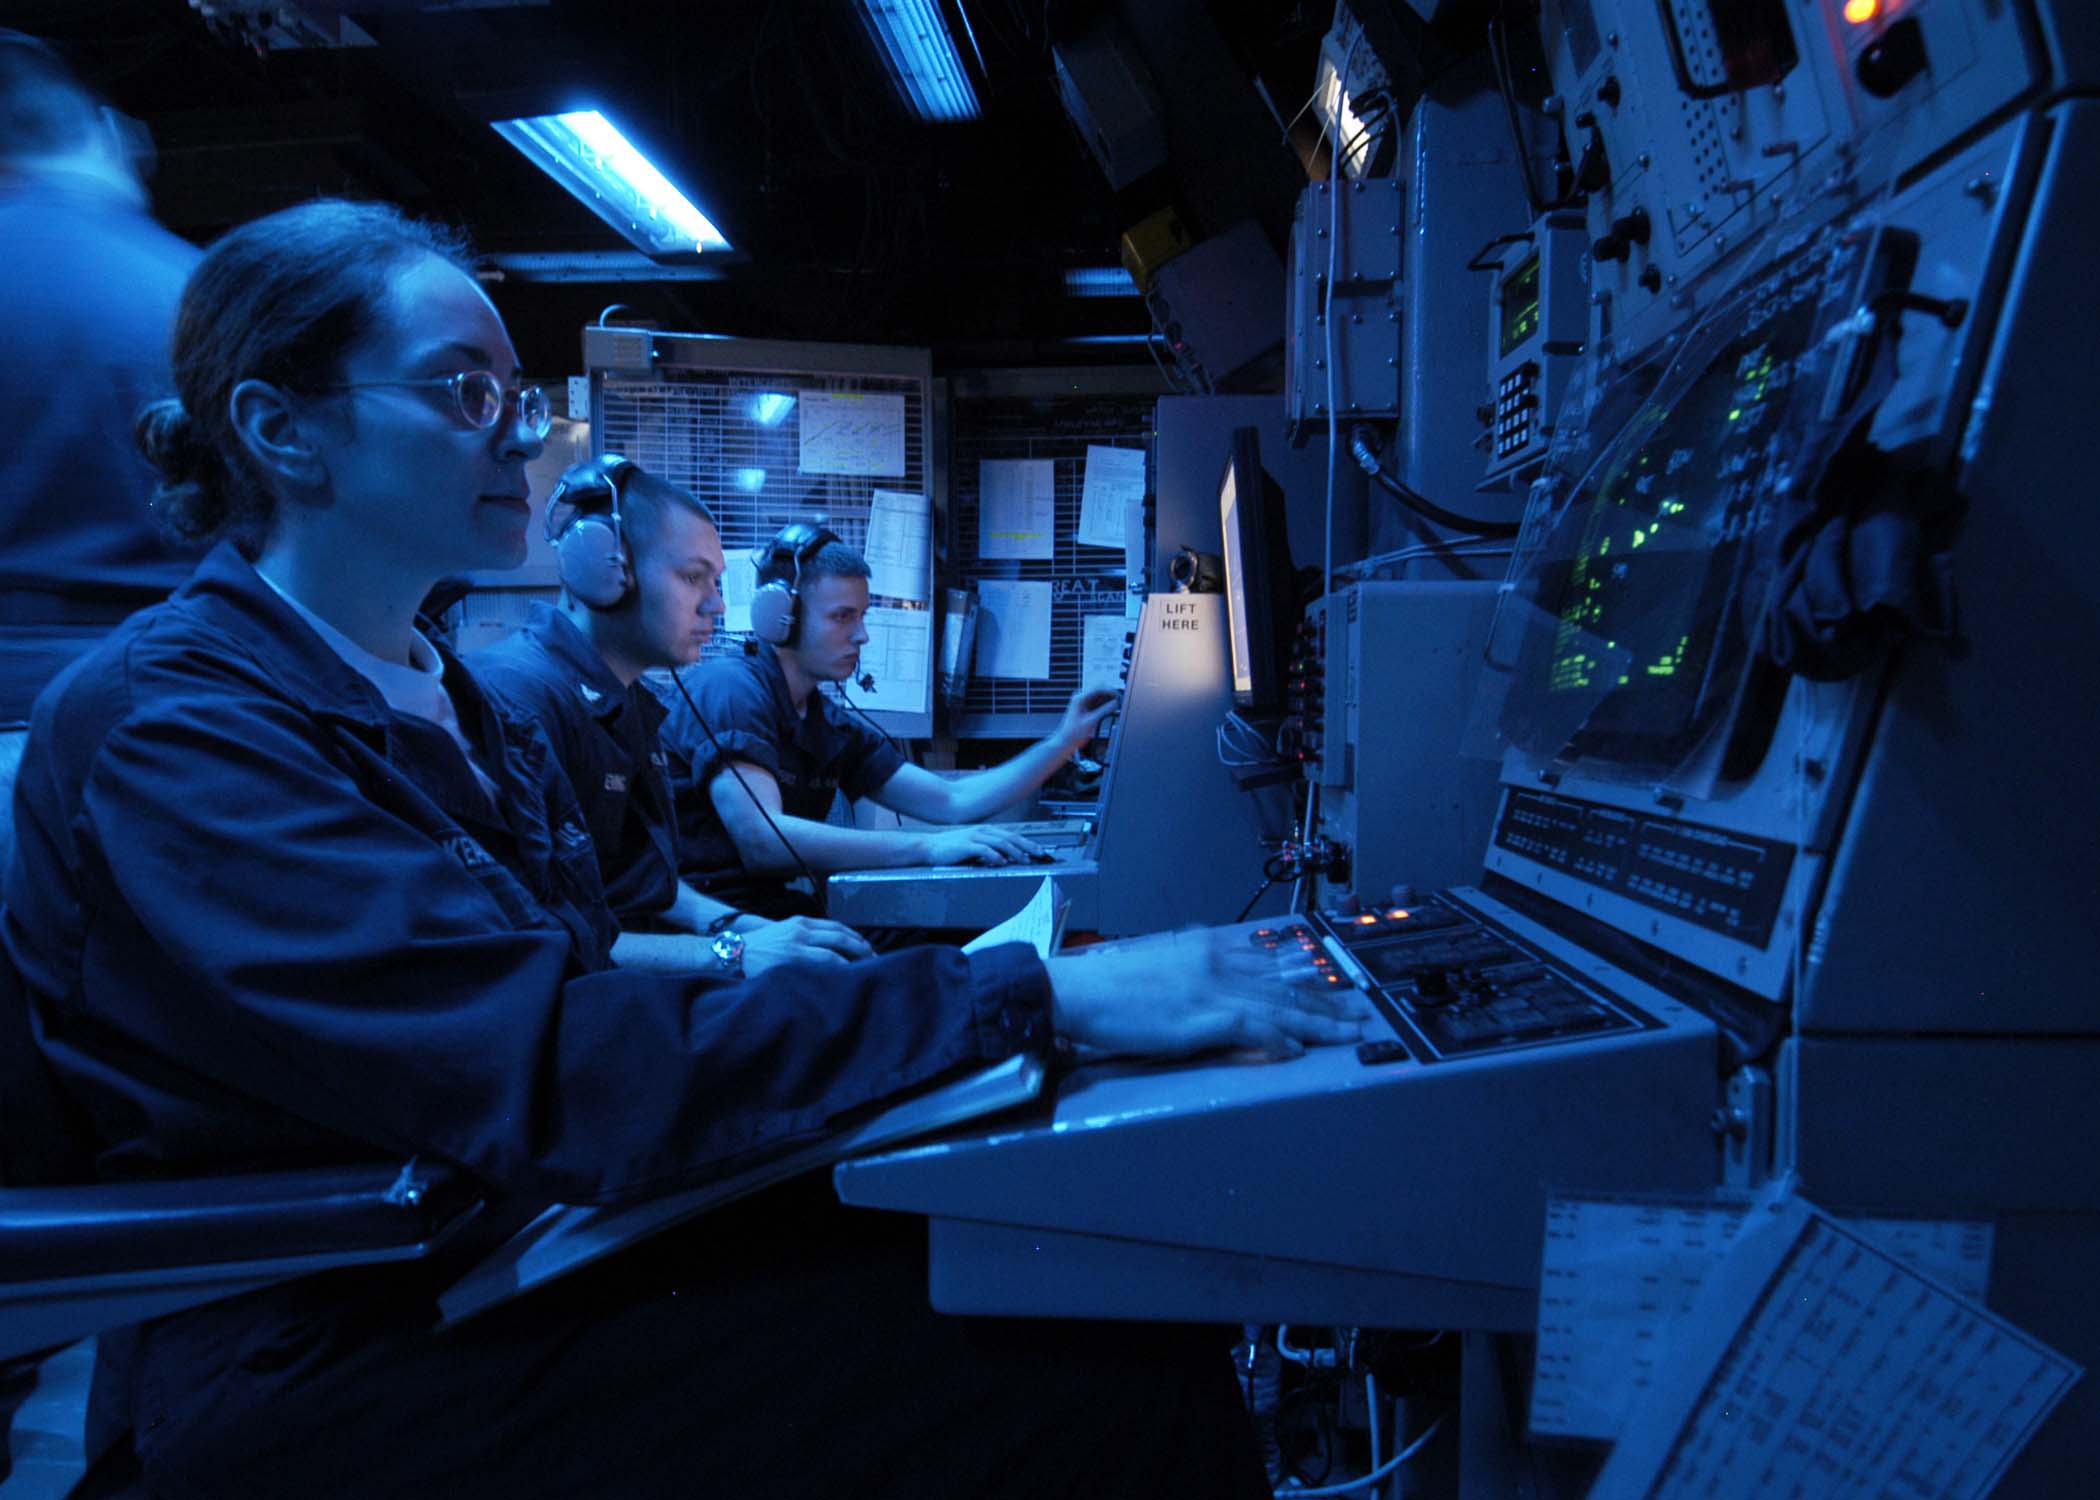 US Navy 050215-N-1229B-050 Cryptologic Technician Technical Seaman Annette Mckean monitors a radar screen during her watch aboard the Nimitz-class aircraft carrier USS Abraham Lincoln (CVN 72)